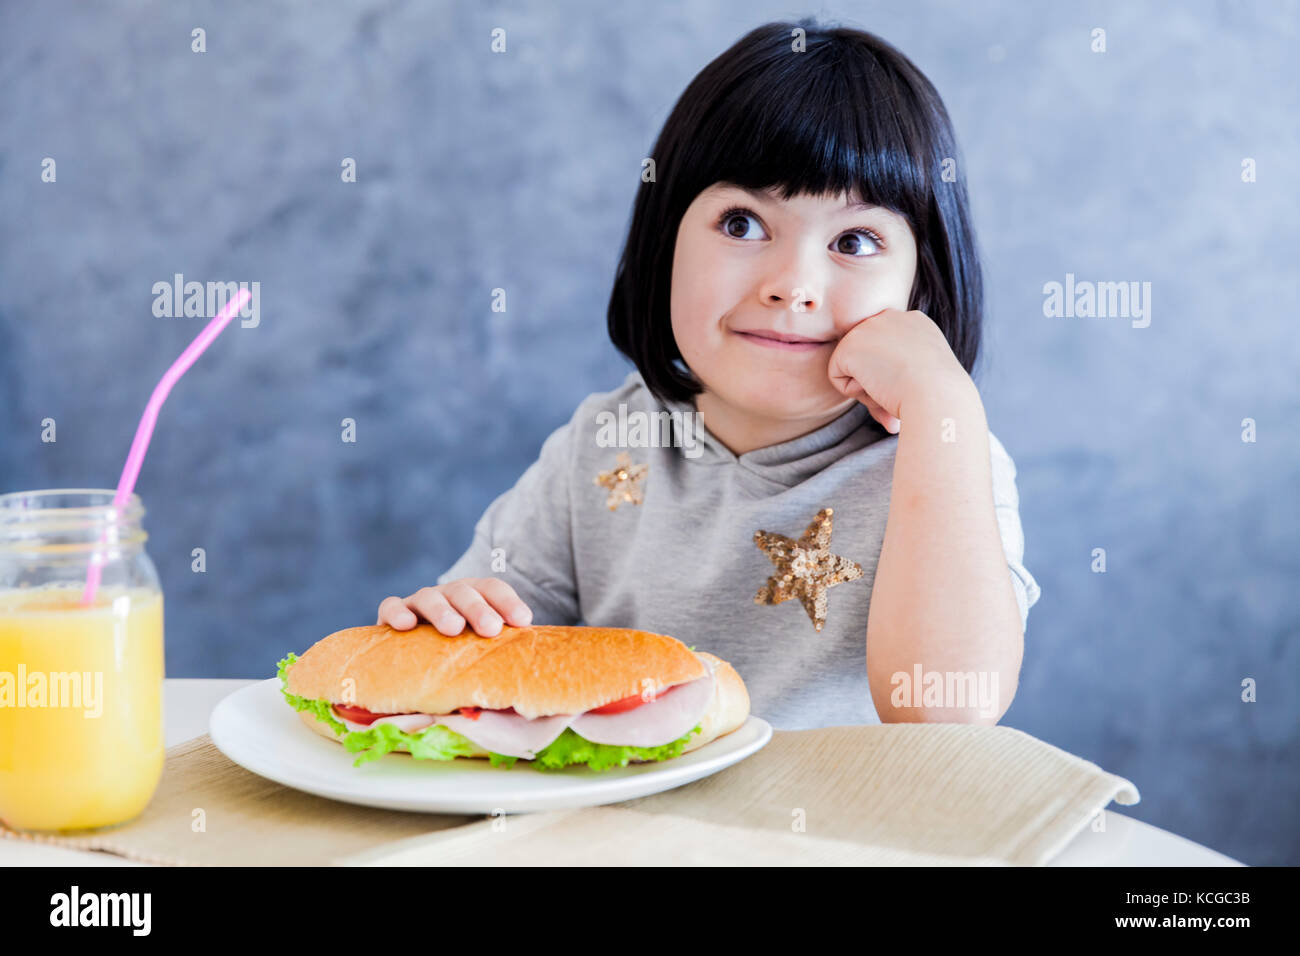 Cute black hair little girl eating sandwich at home Stock Photo